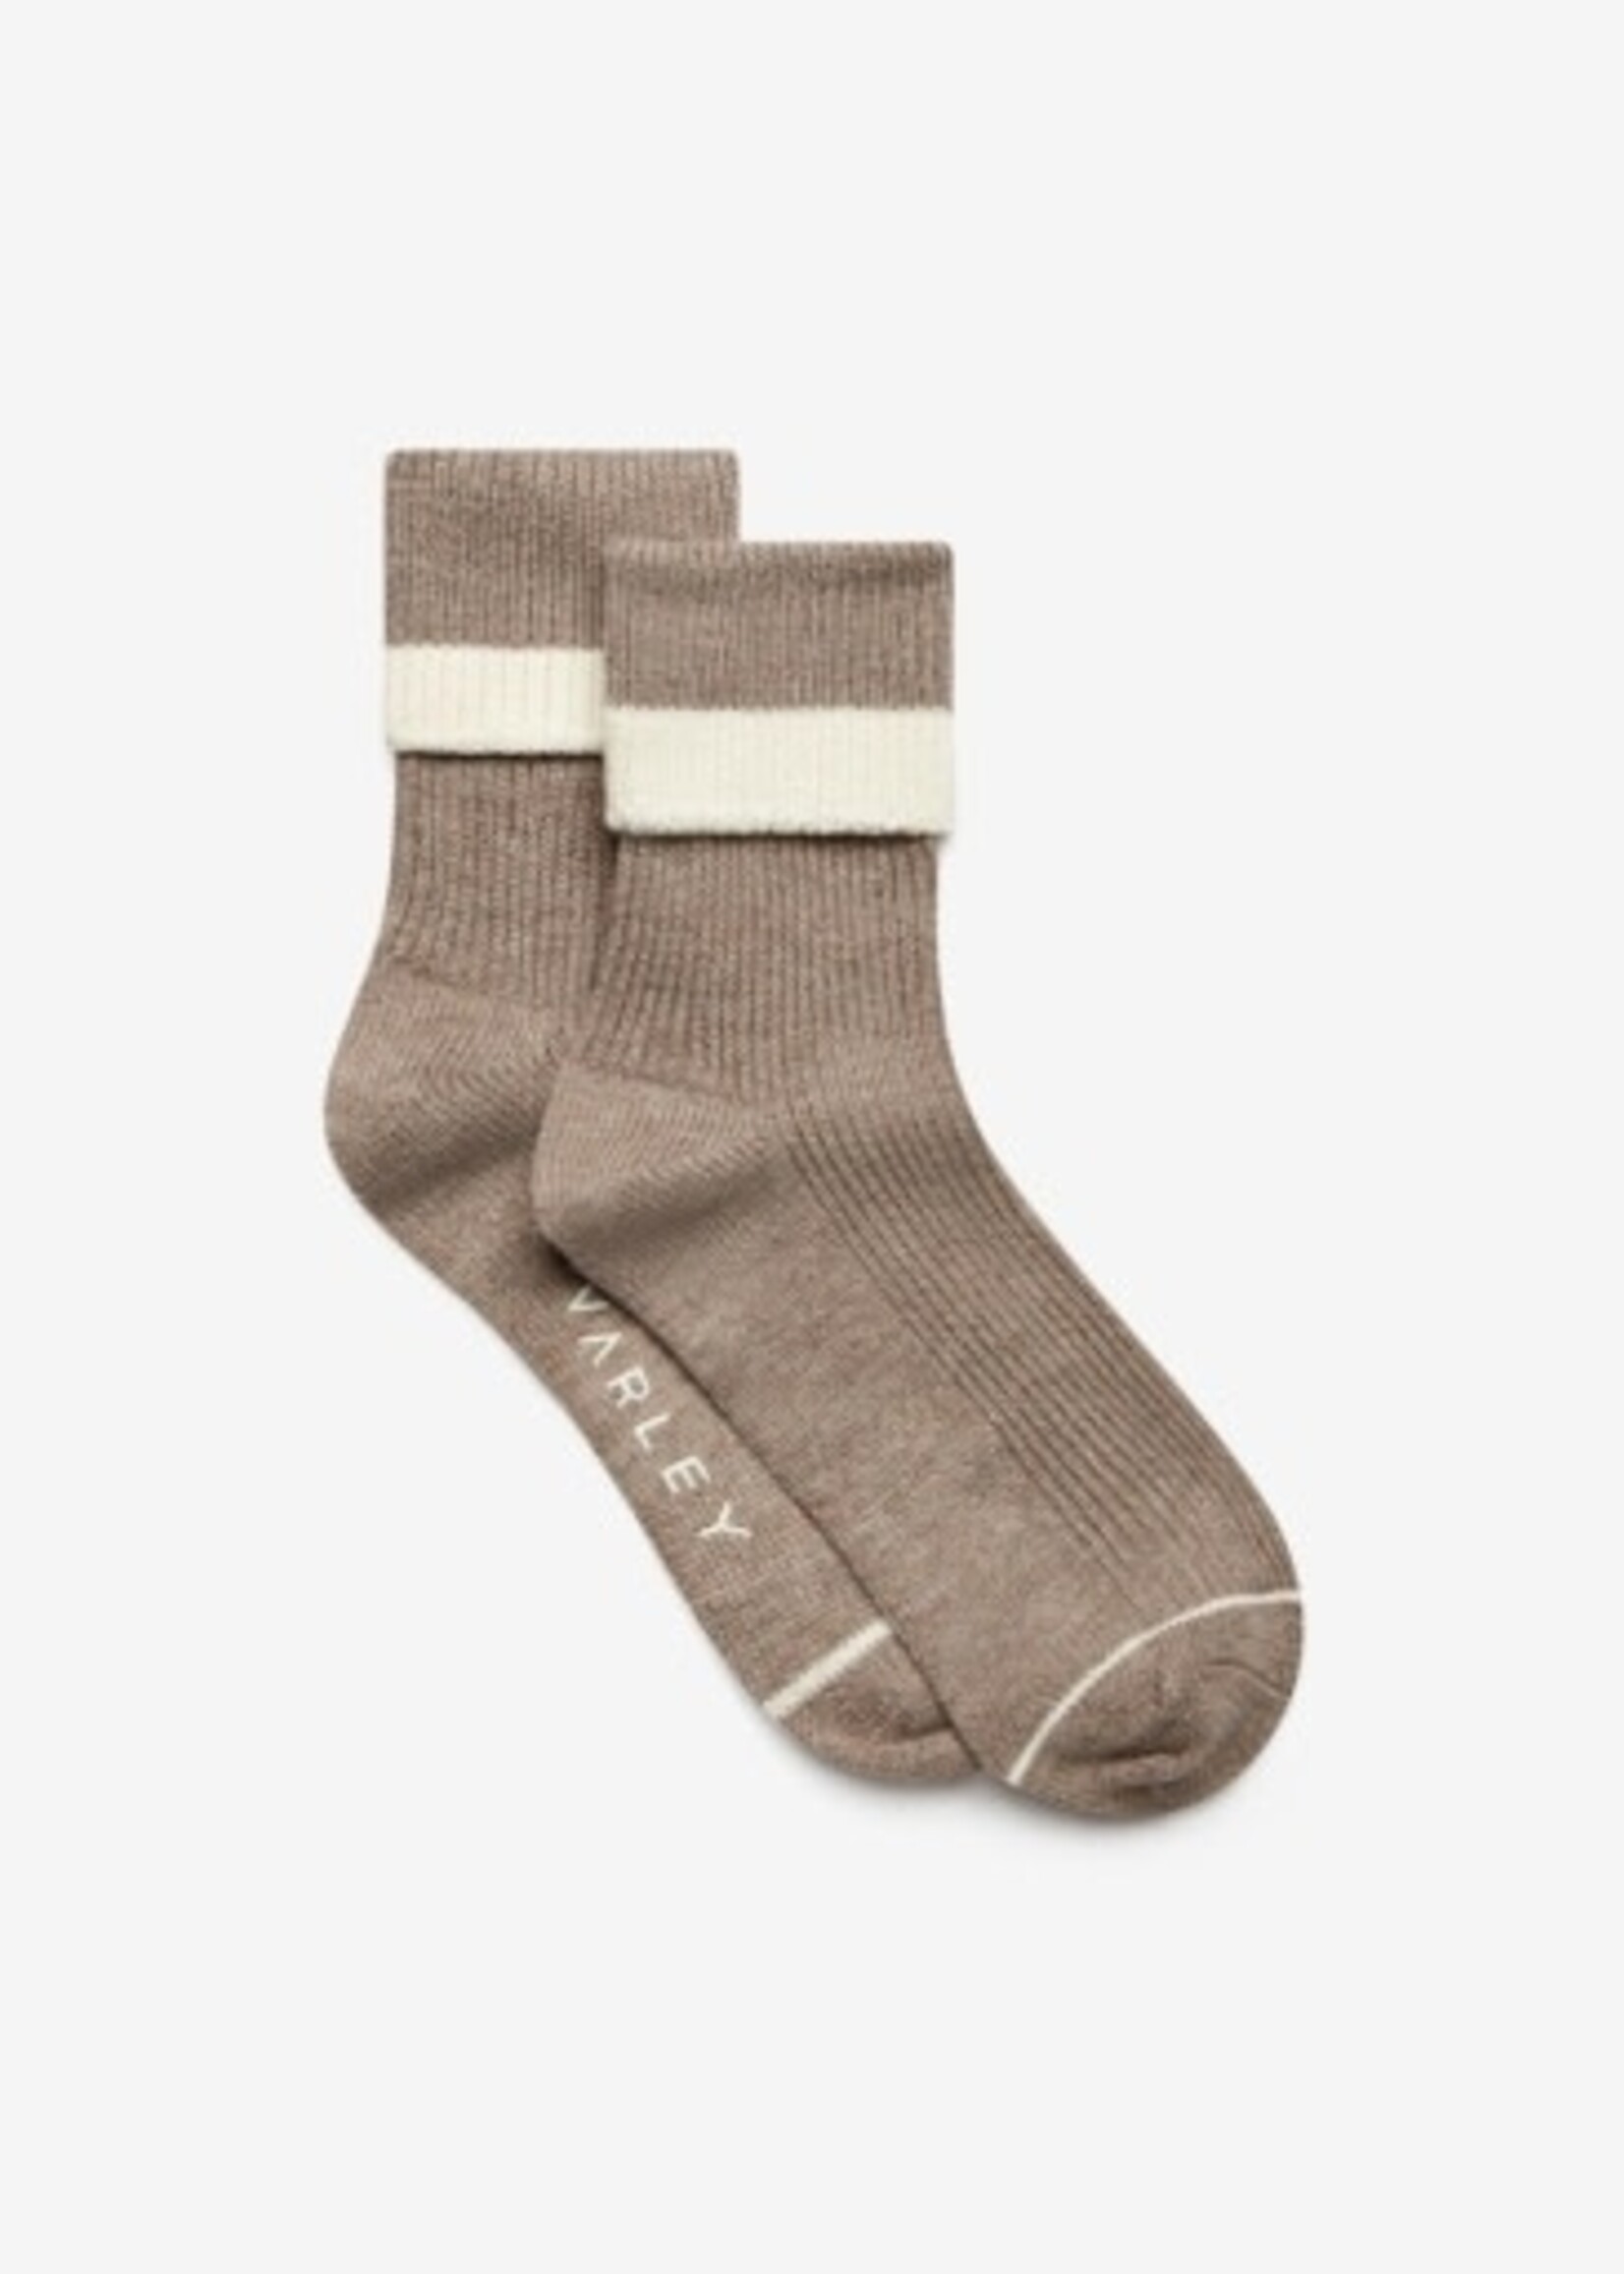 Varley kerry plush roll top sock